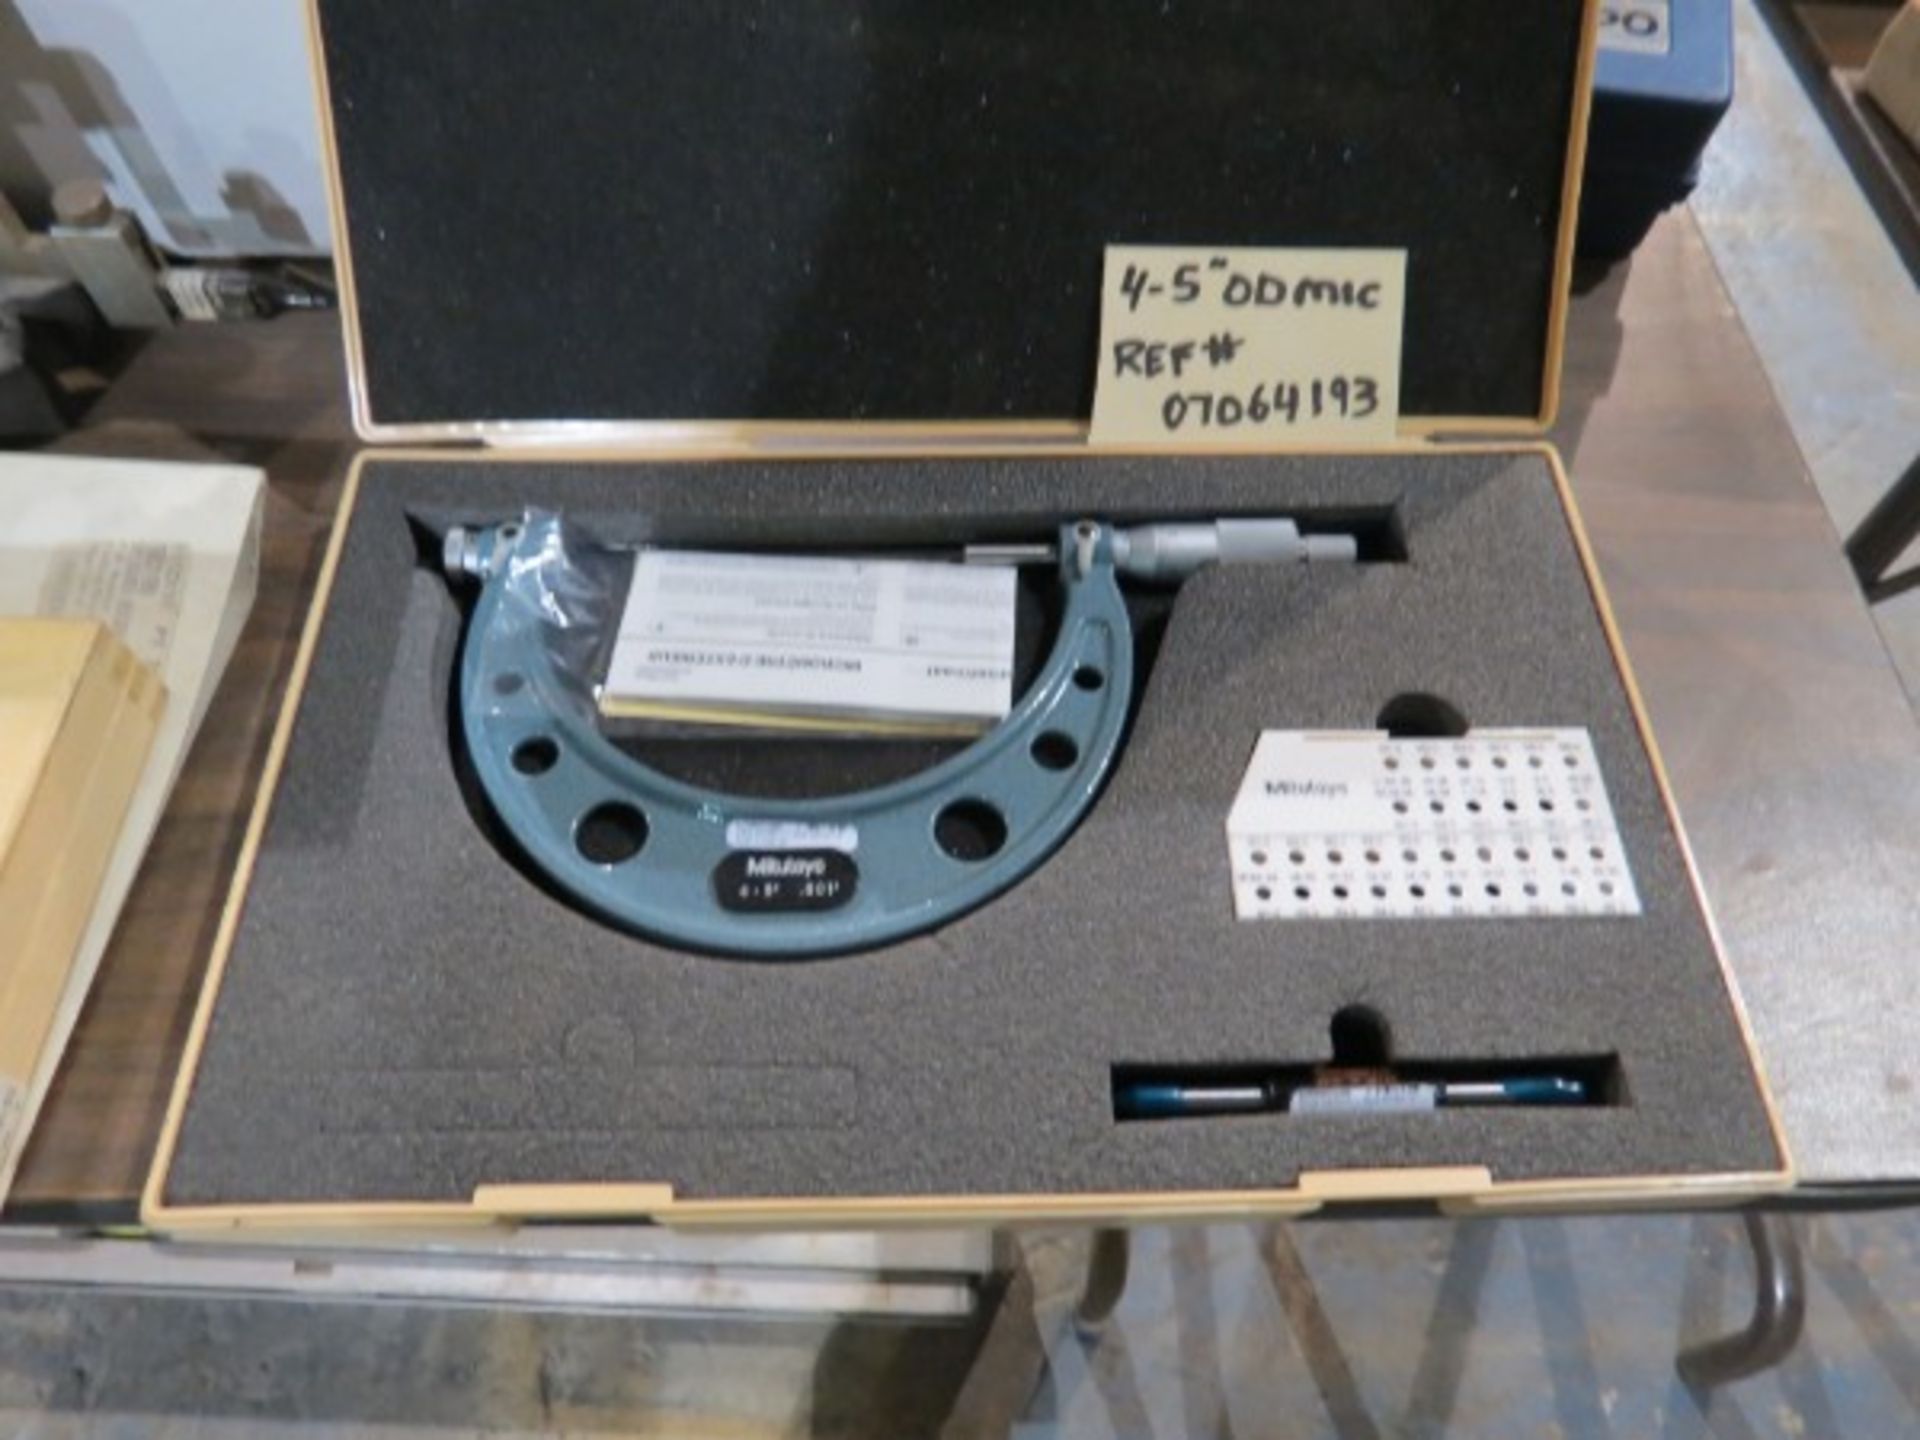 Mitutoyo 4-5" OD Micrometer